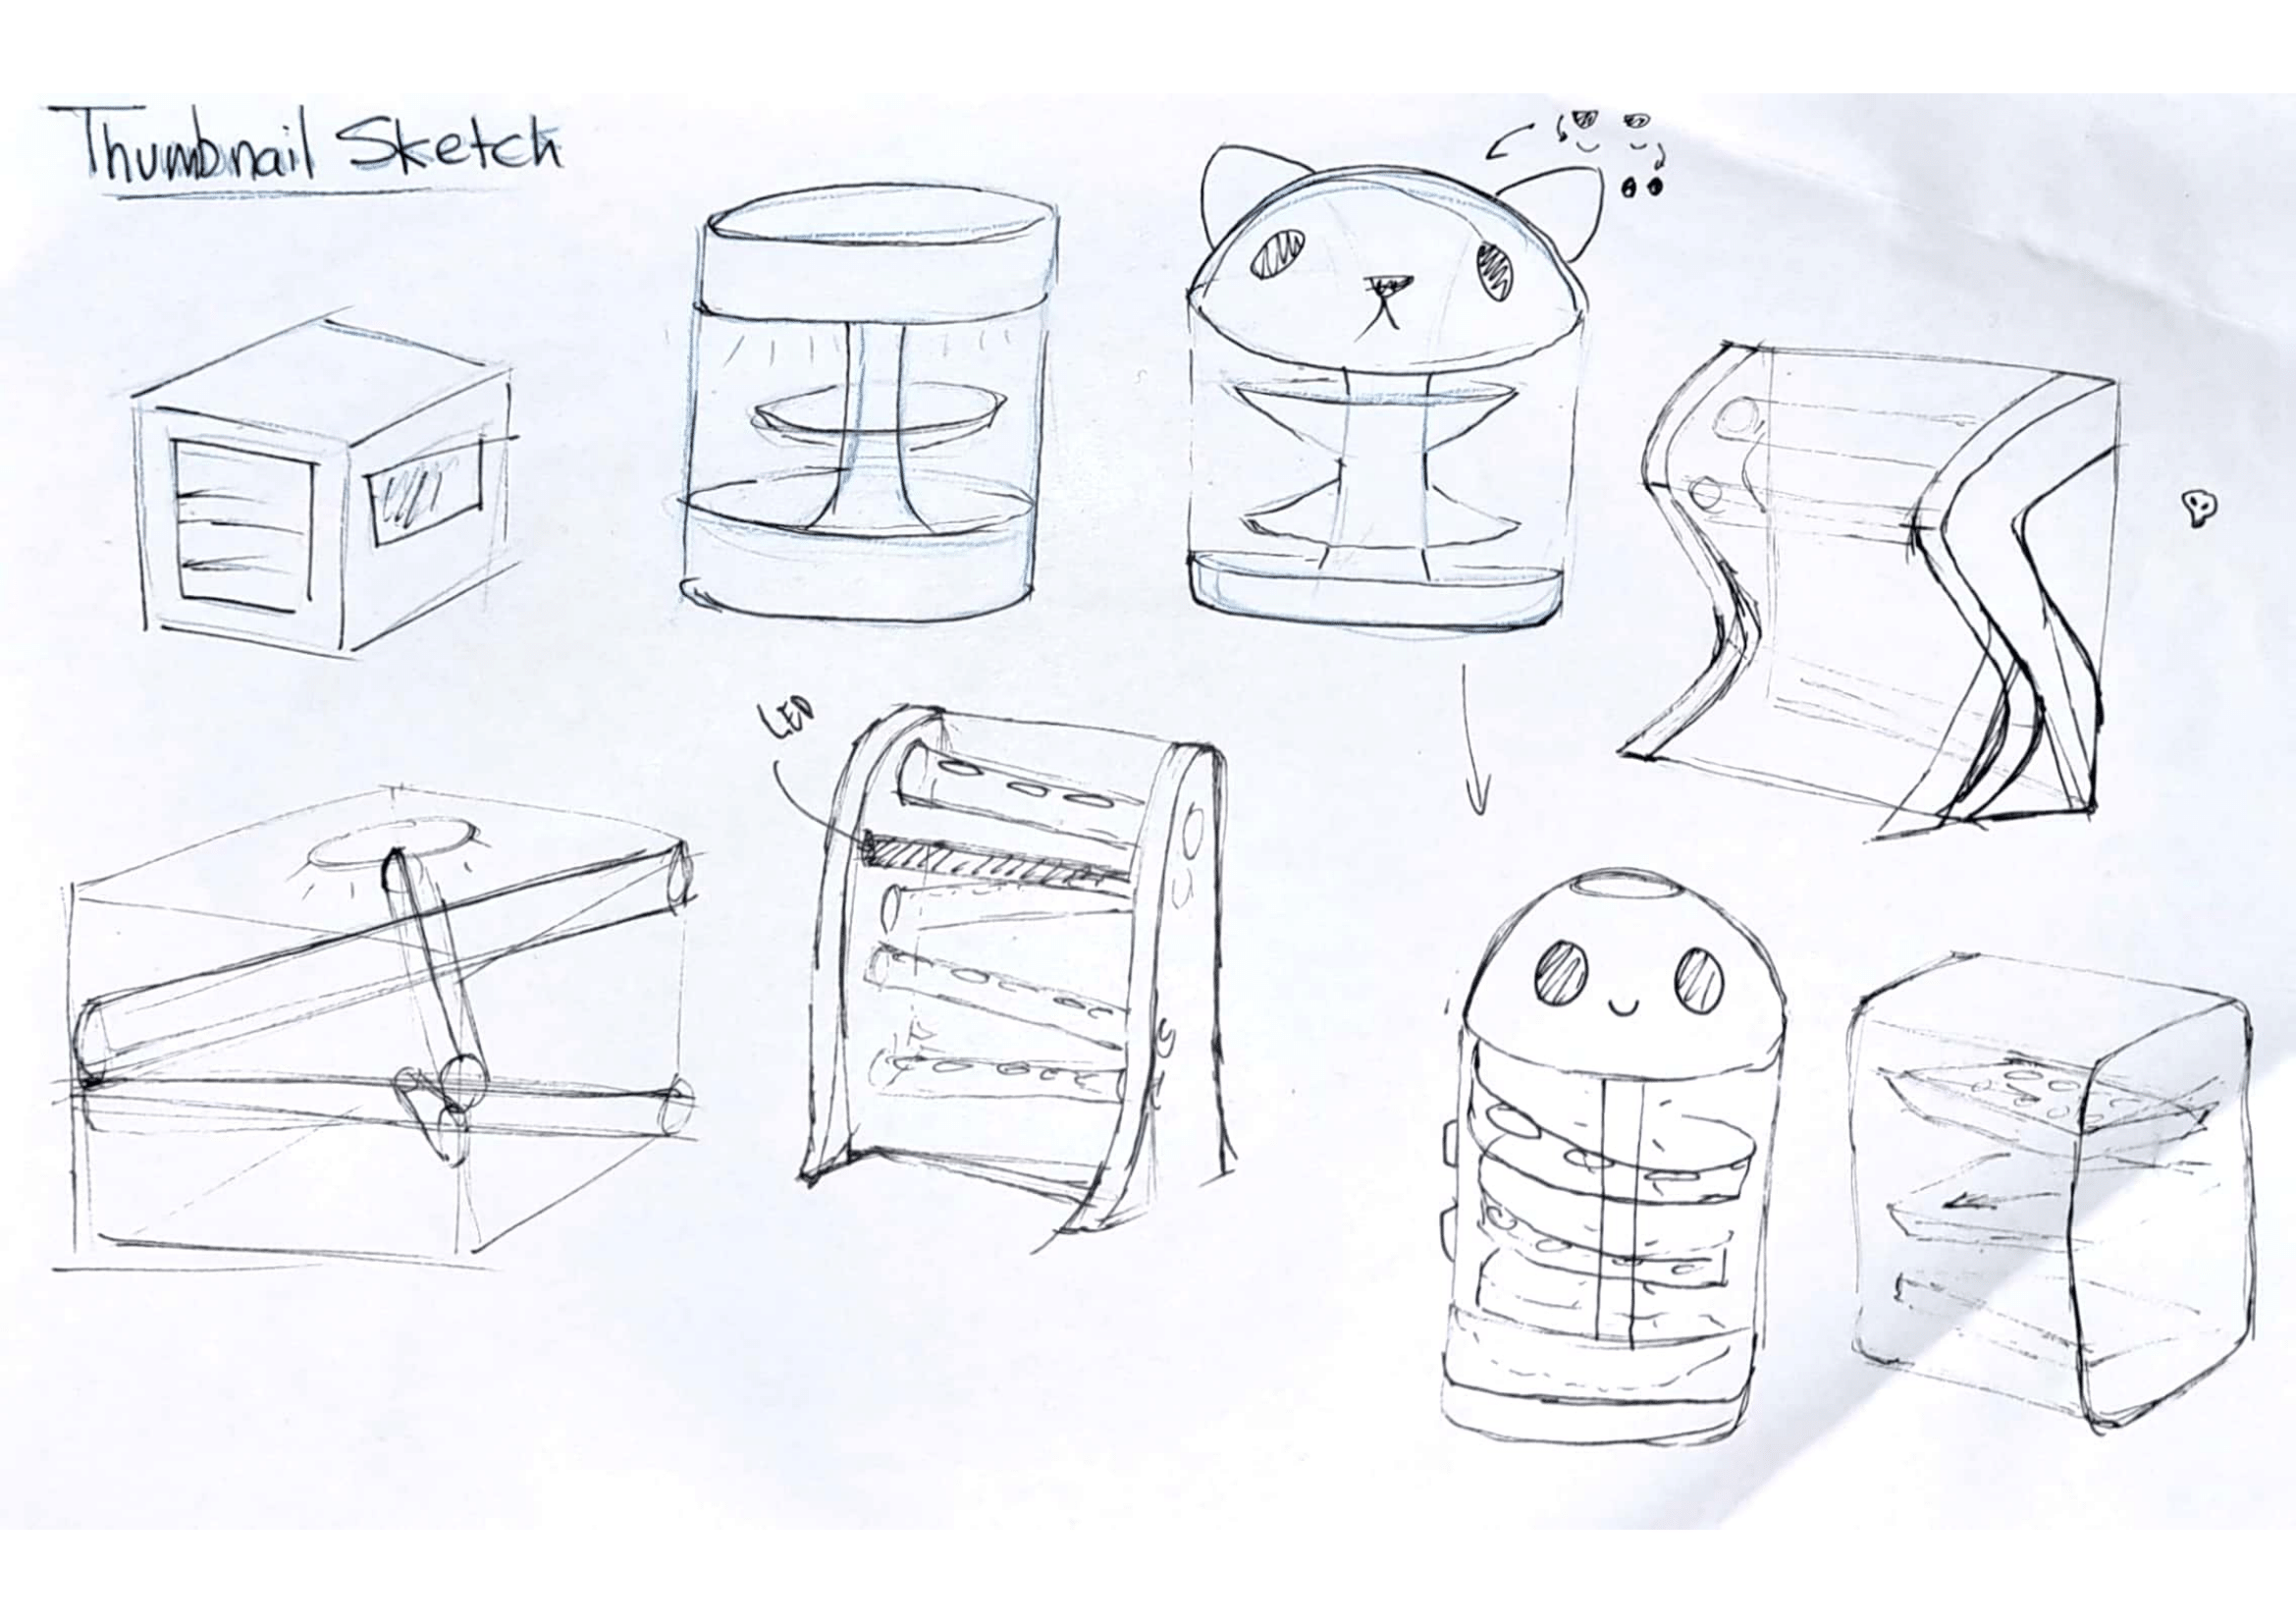 File:Thumbnail sketches.png